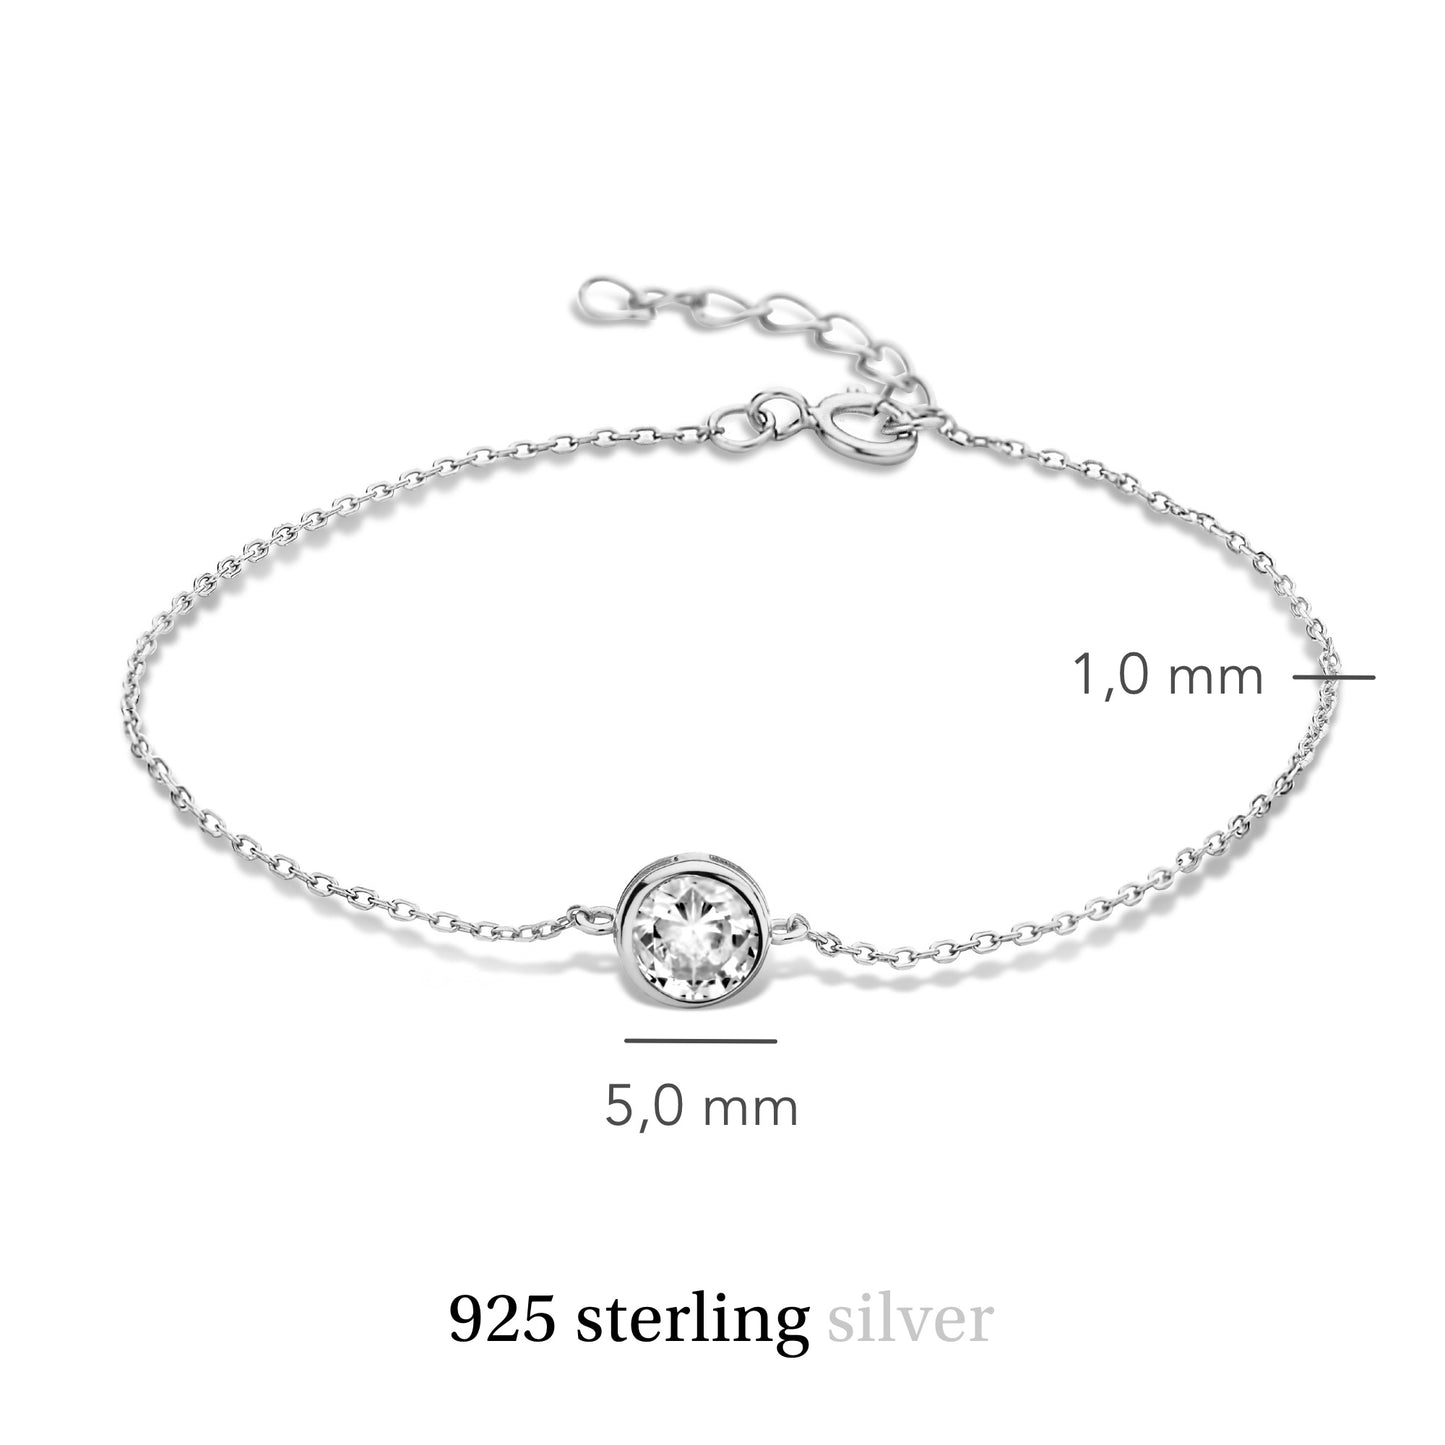 Venus 925 sterling silver bracelet with birthstone